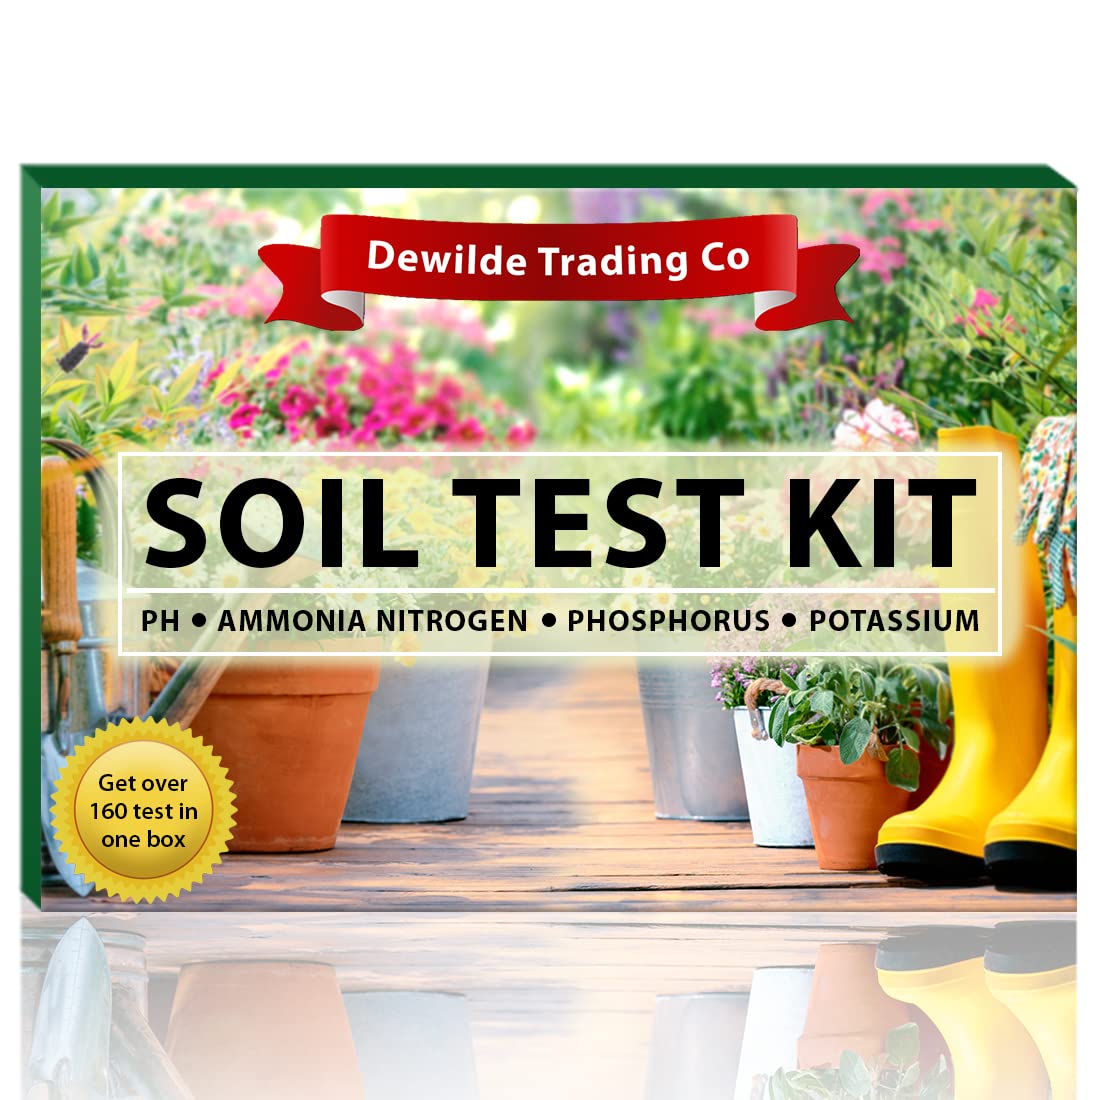 Soil Test Kit -140 Test- Testing PH Ammonia Nitrogen Phosphorus and Potassium - Tester for Your Vegetable Garden Lawn and Soil